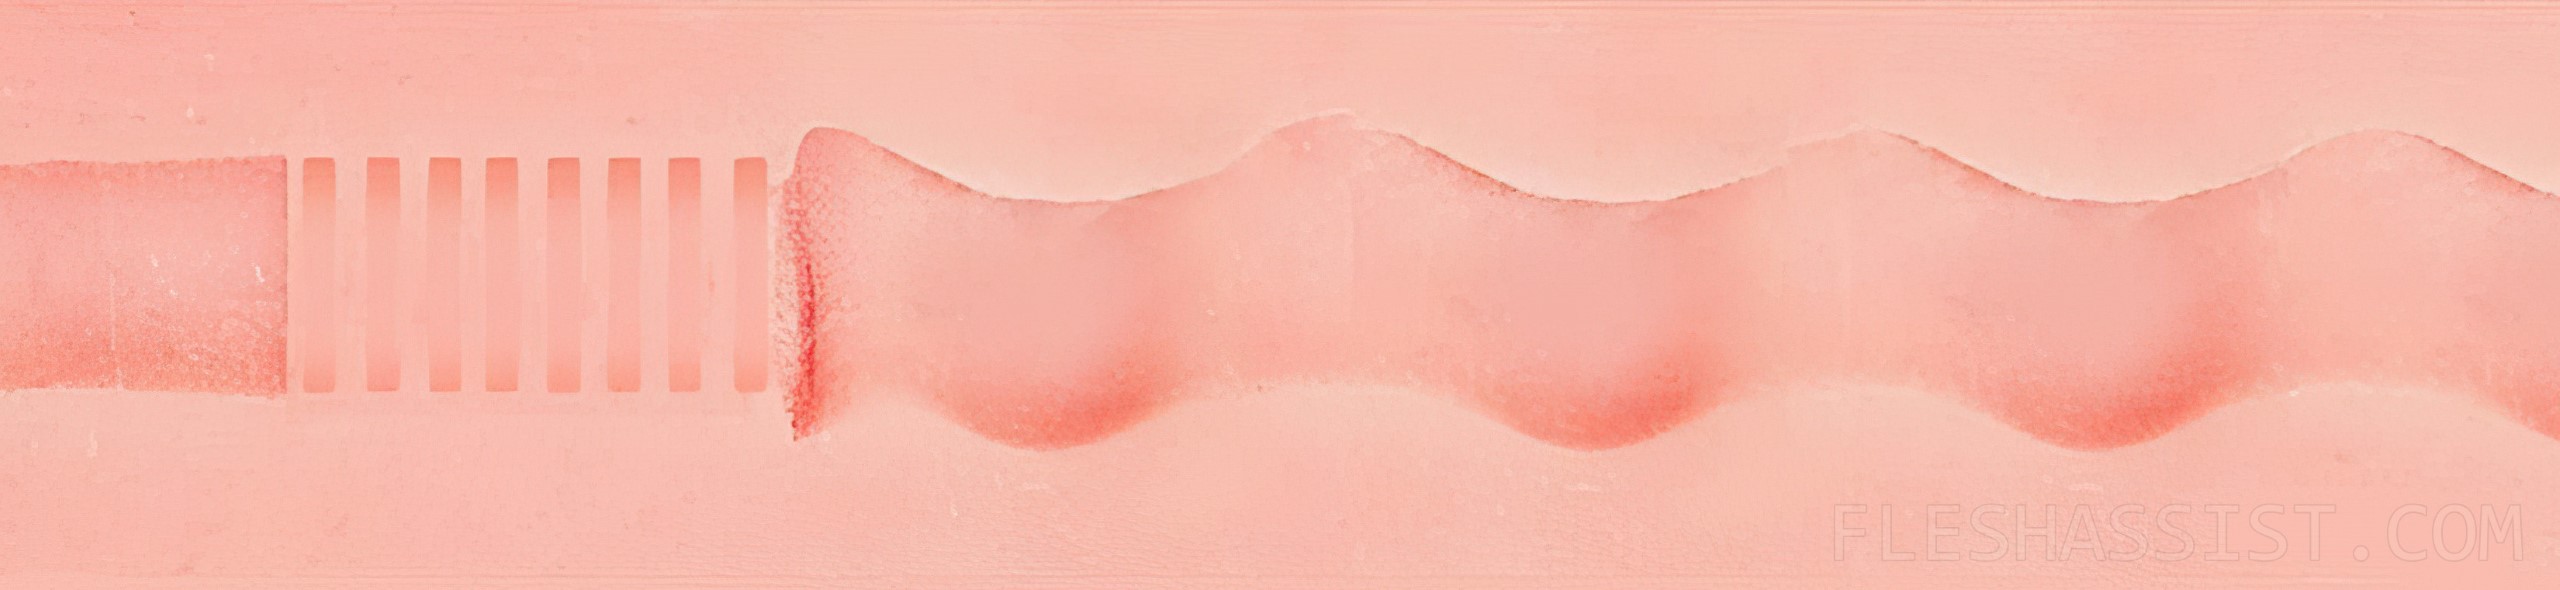 Mini-Forbidden (SIAC) Sex In A Can Texture Image